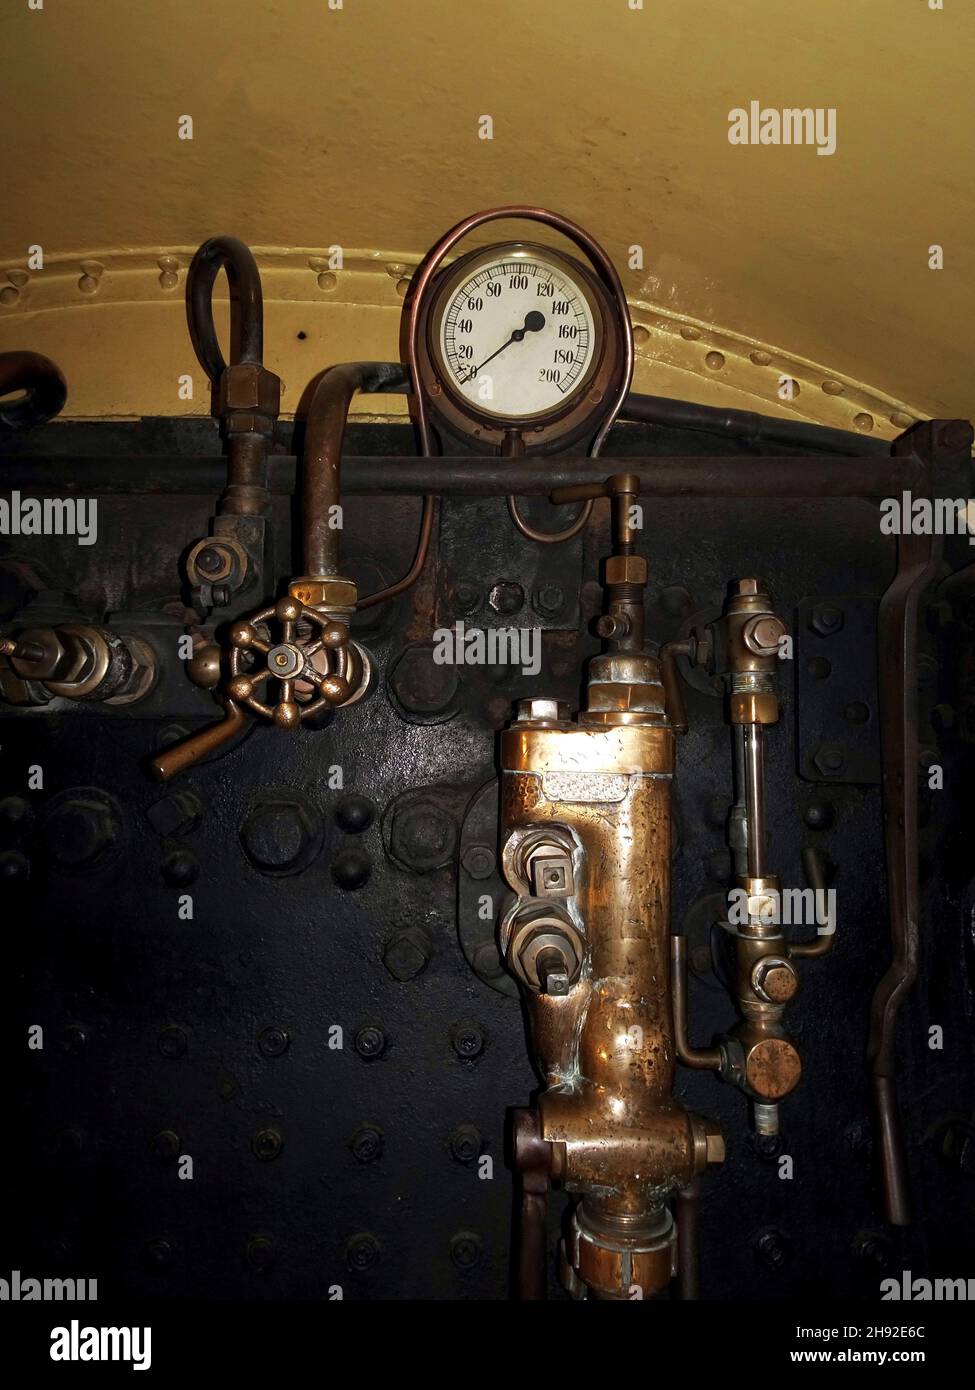 Interior of vintage steam locomotive Stock Photo